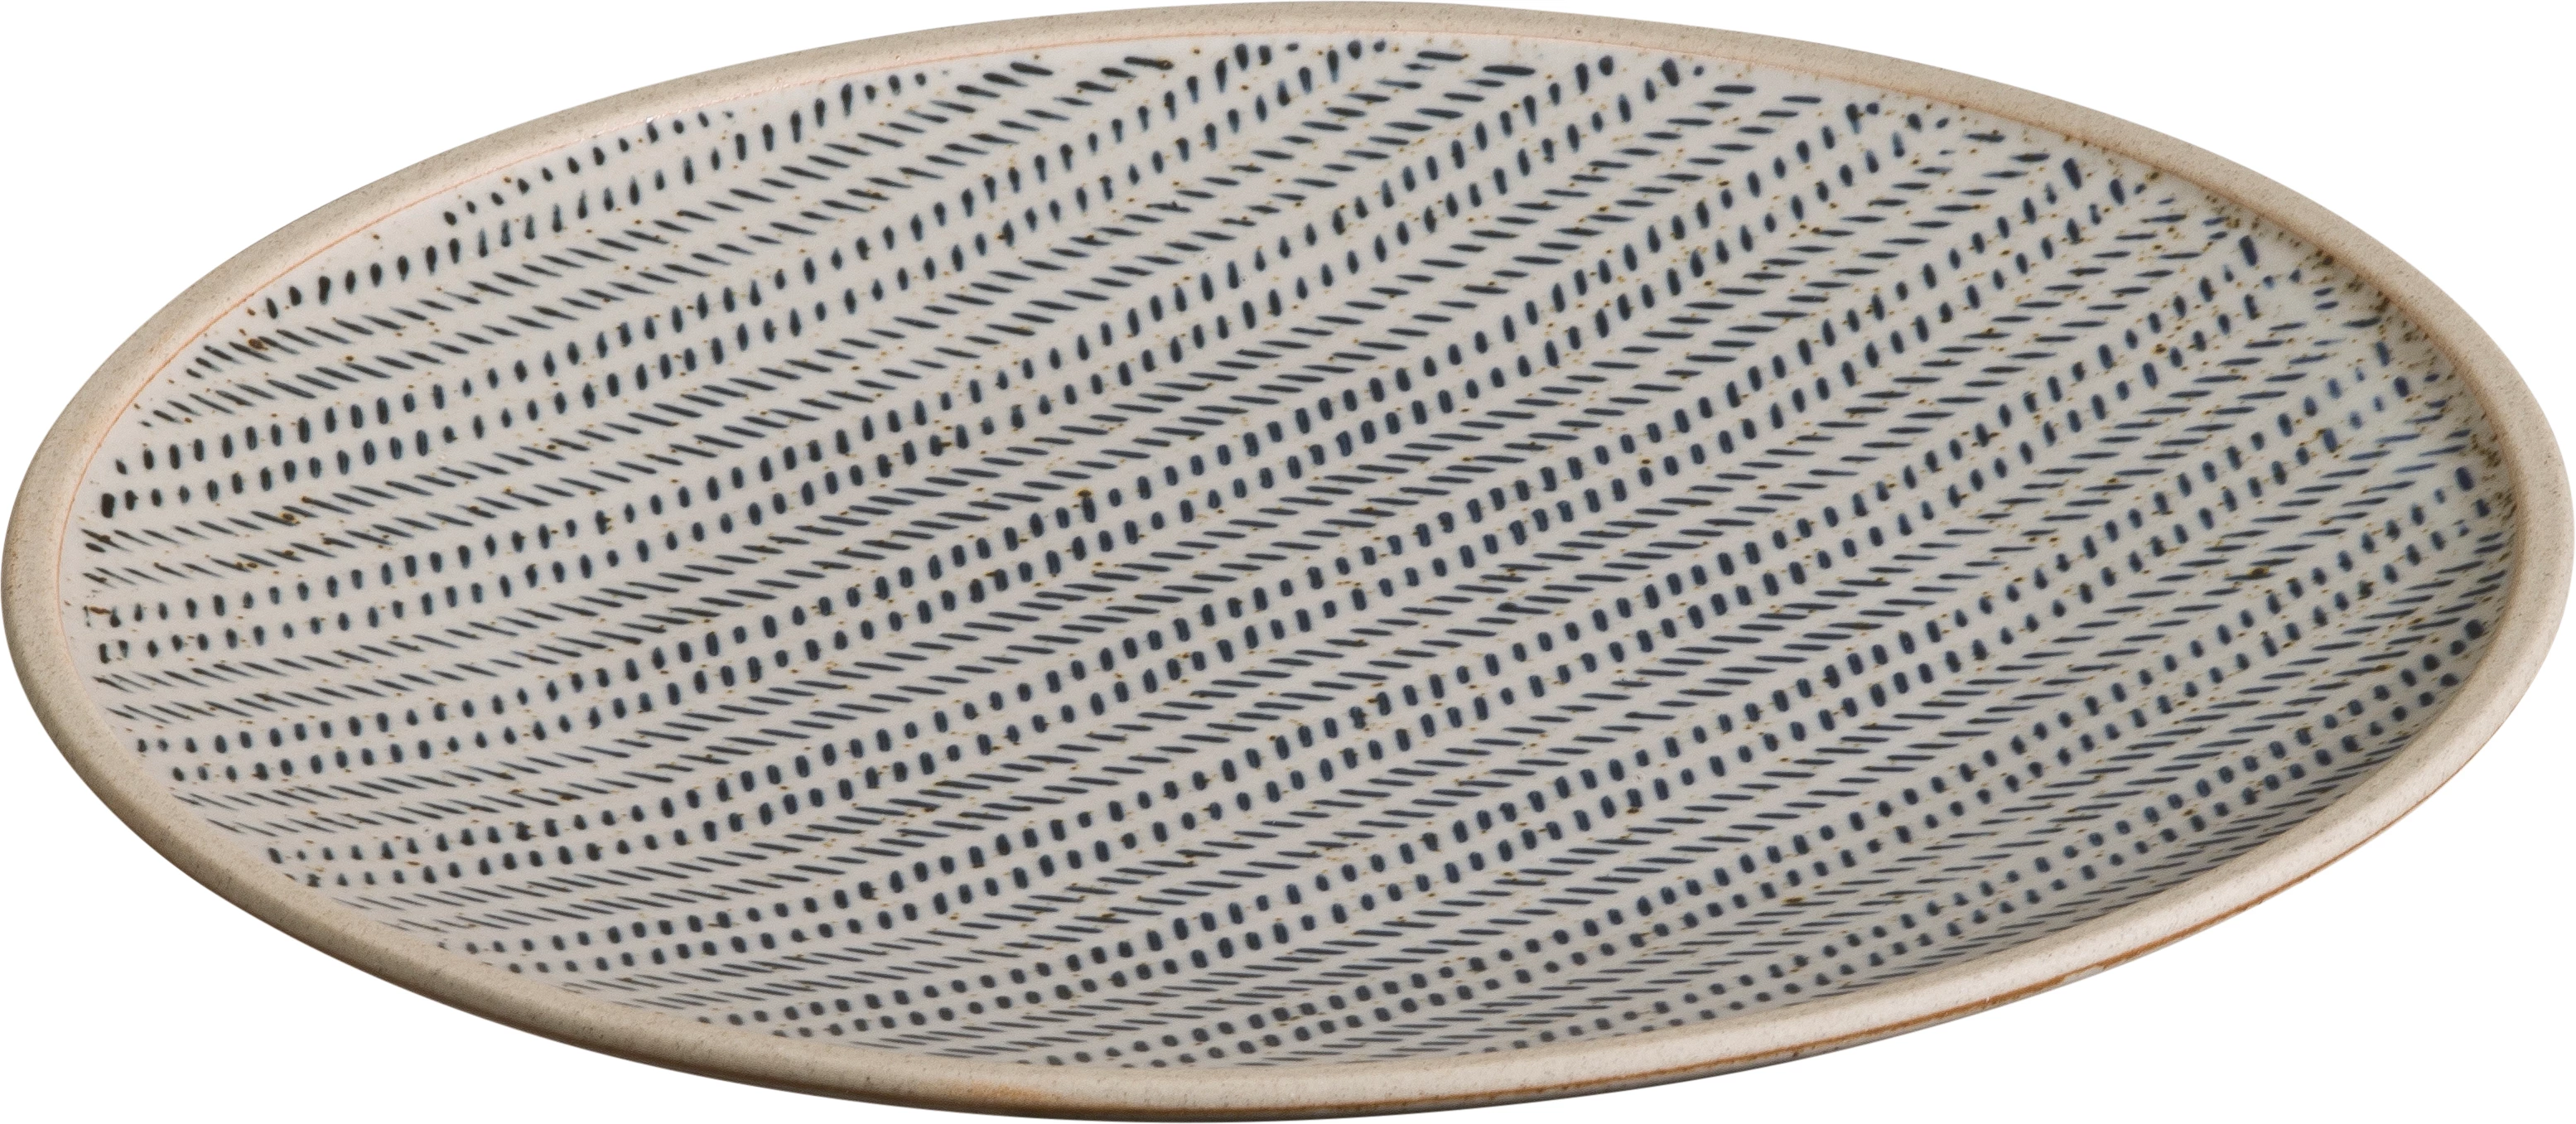 Sorelle flad tallerken uden fane, blå/grå, ø21 cm